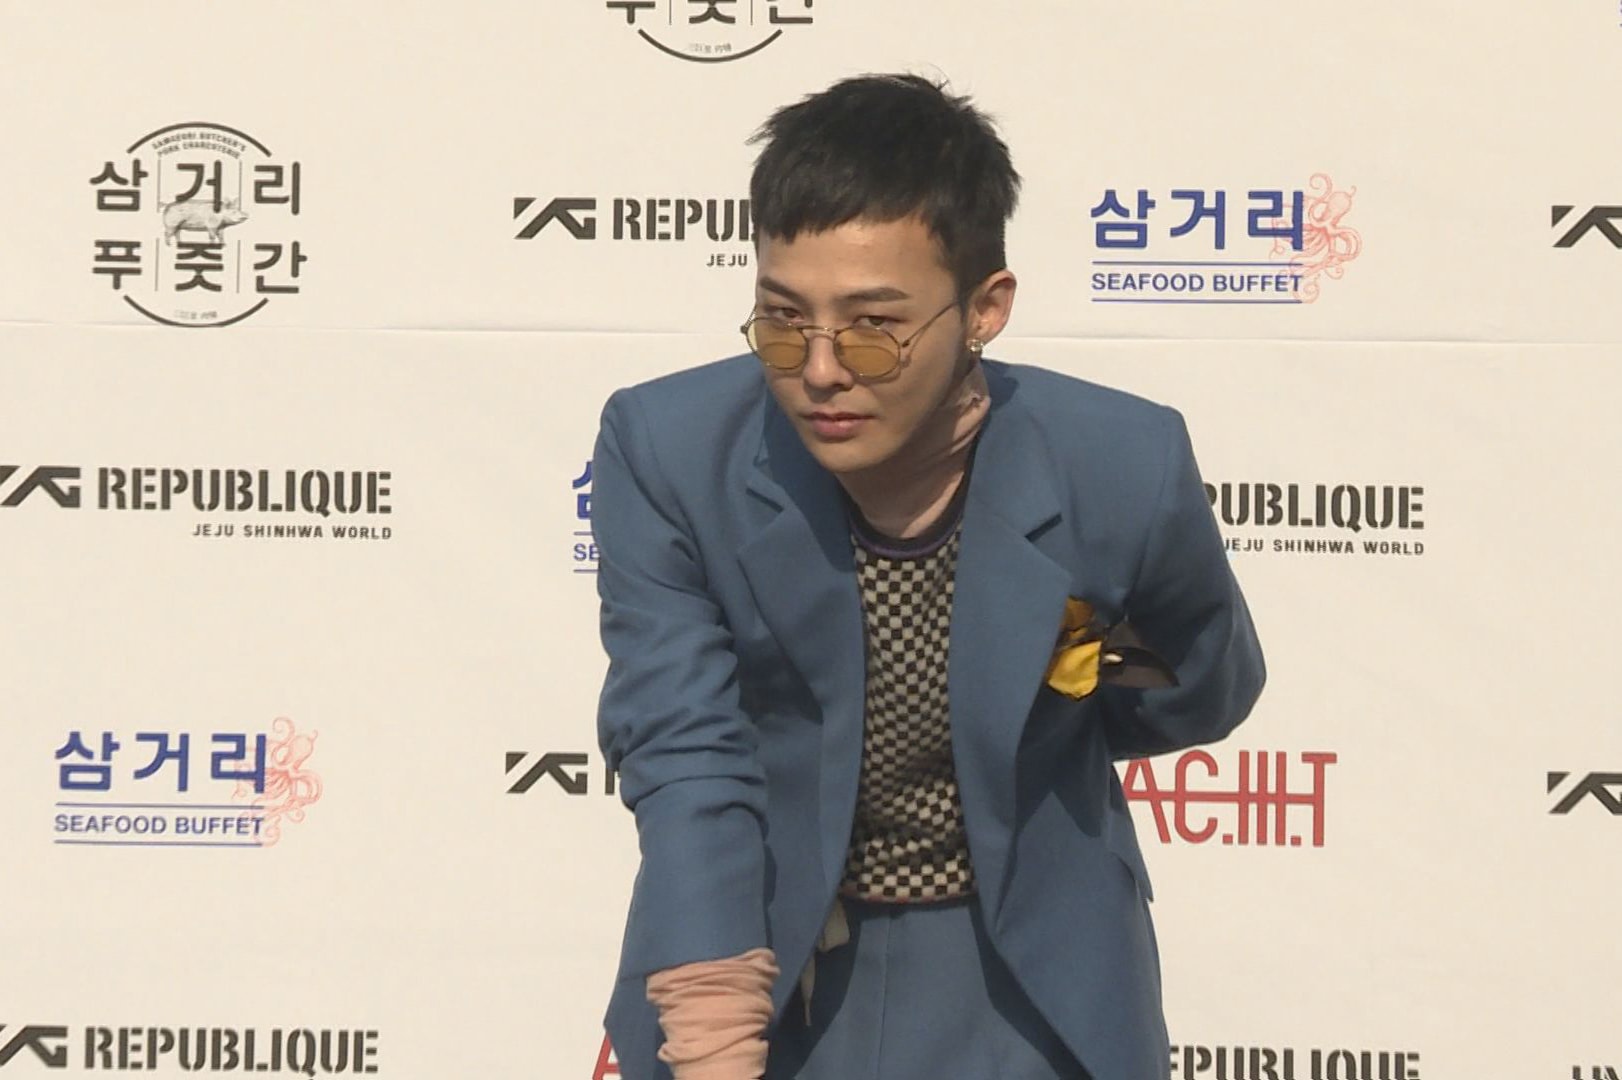 BIGBANG 隊長 G-Dragon 入伍前為 YG Republique 加持